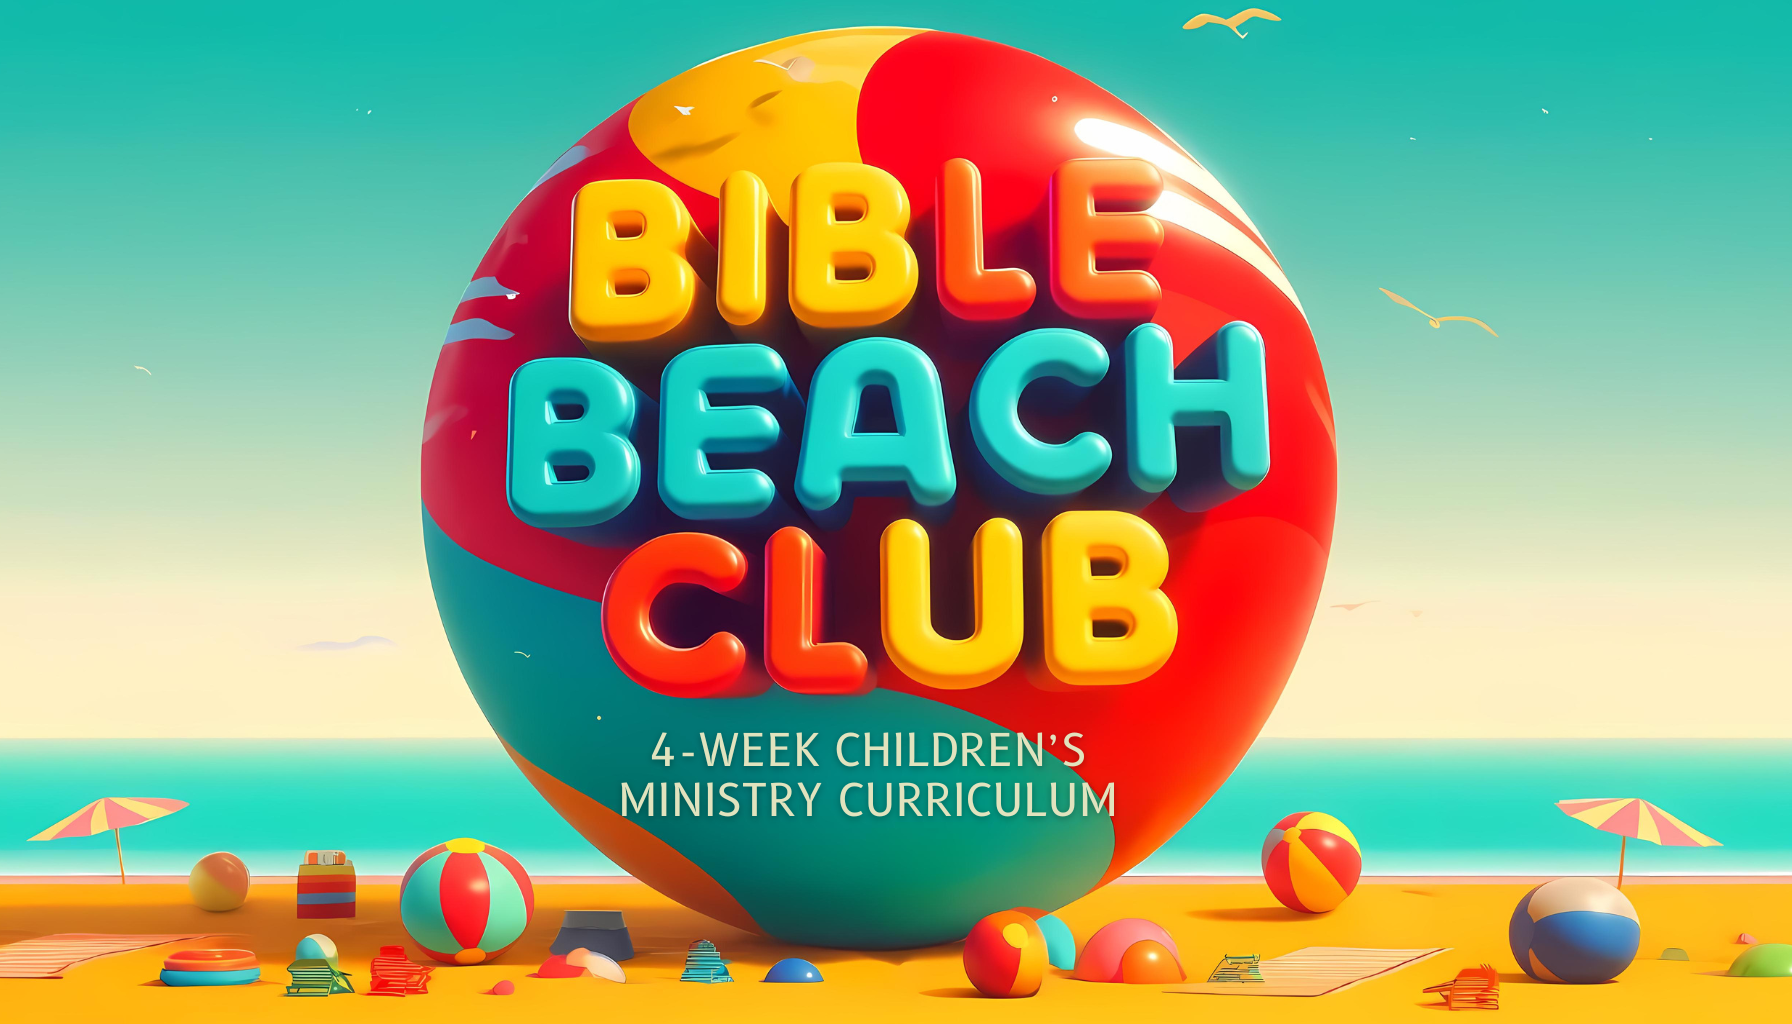 Bible Beach Club VBS Curriculum for Children